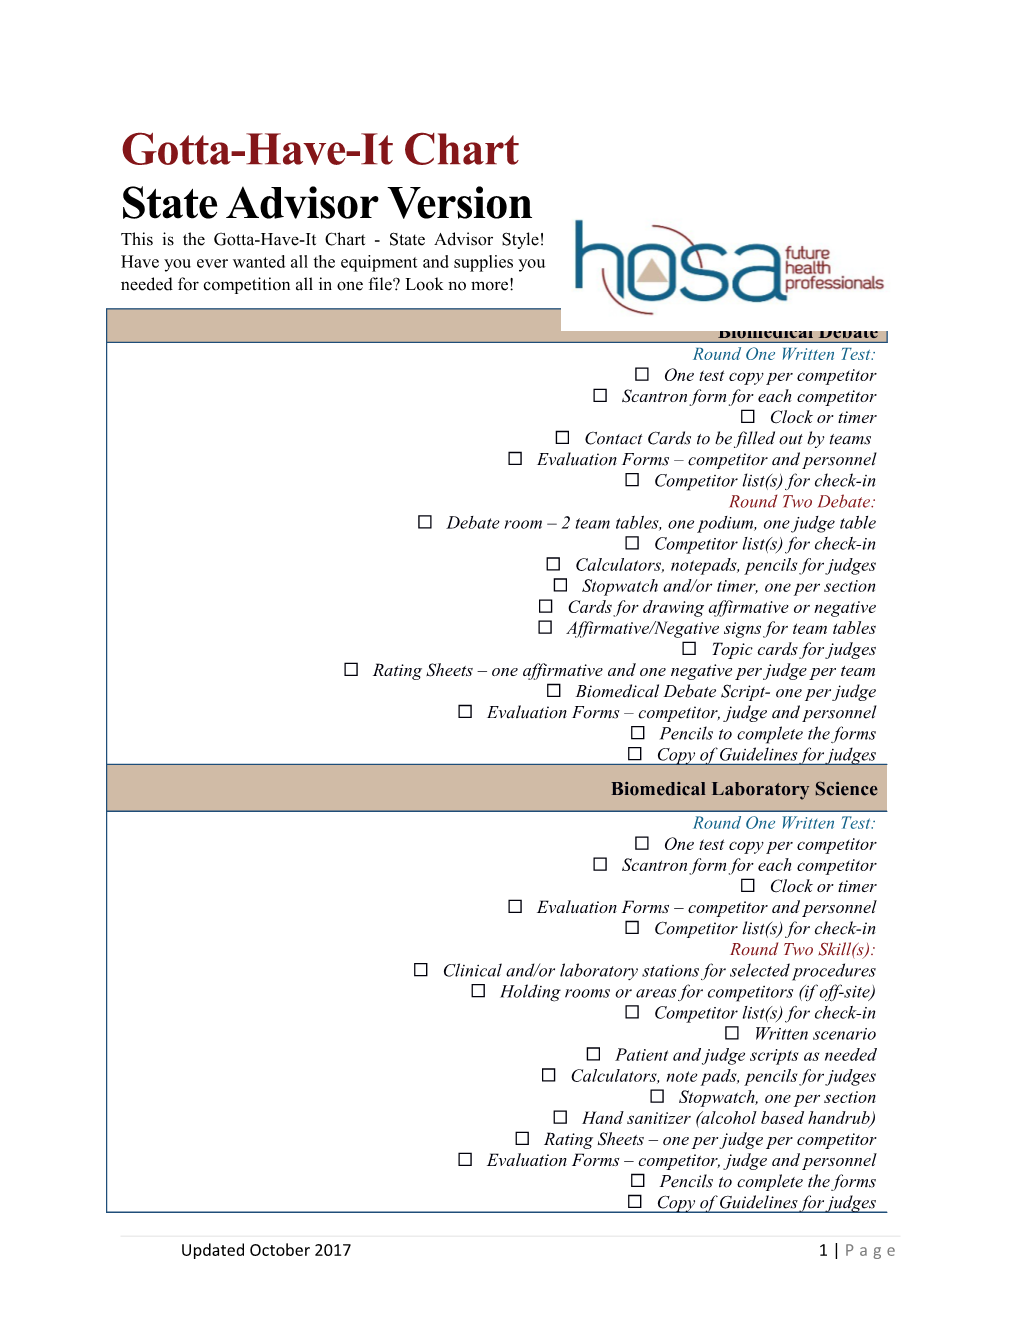 State Advisor Version